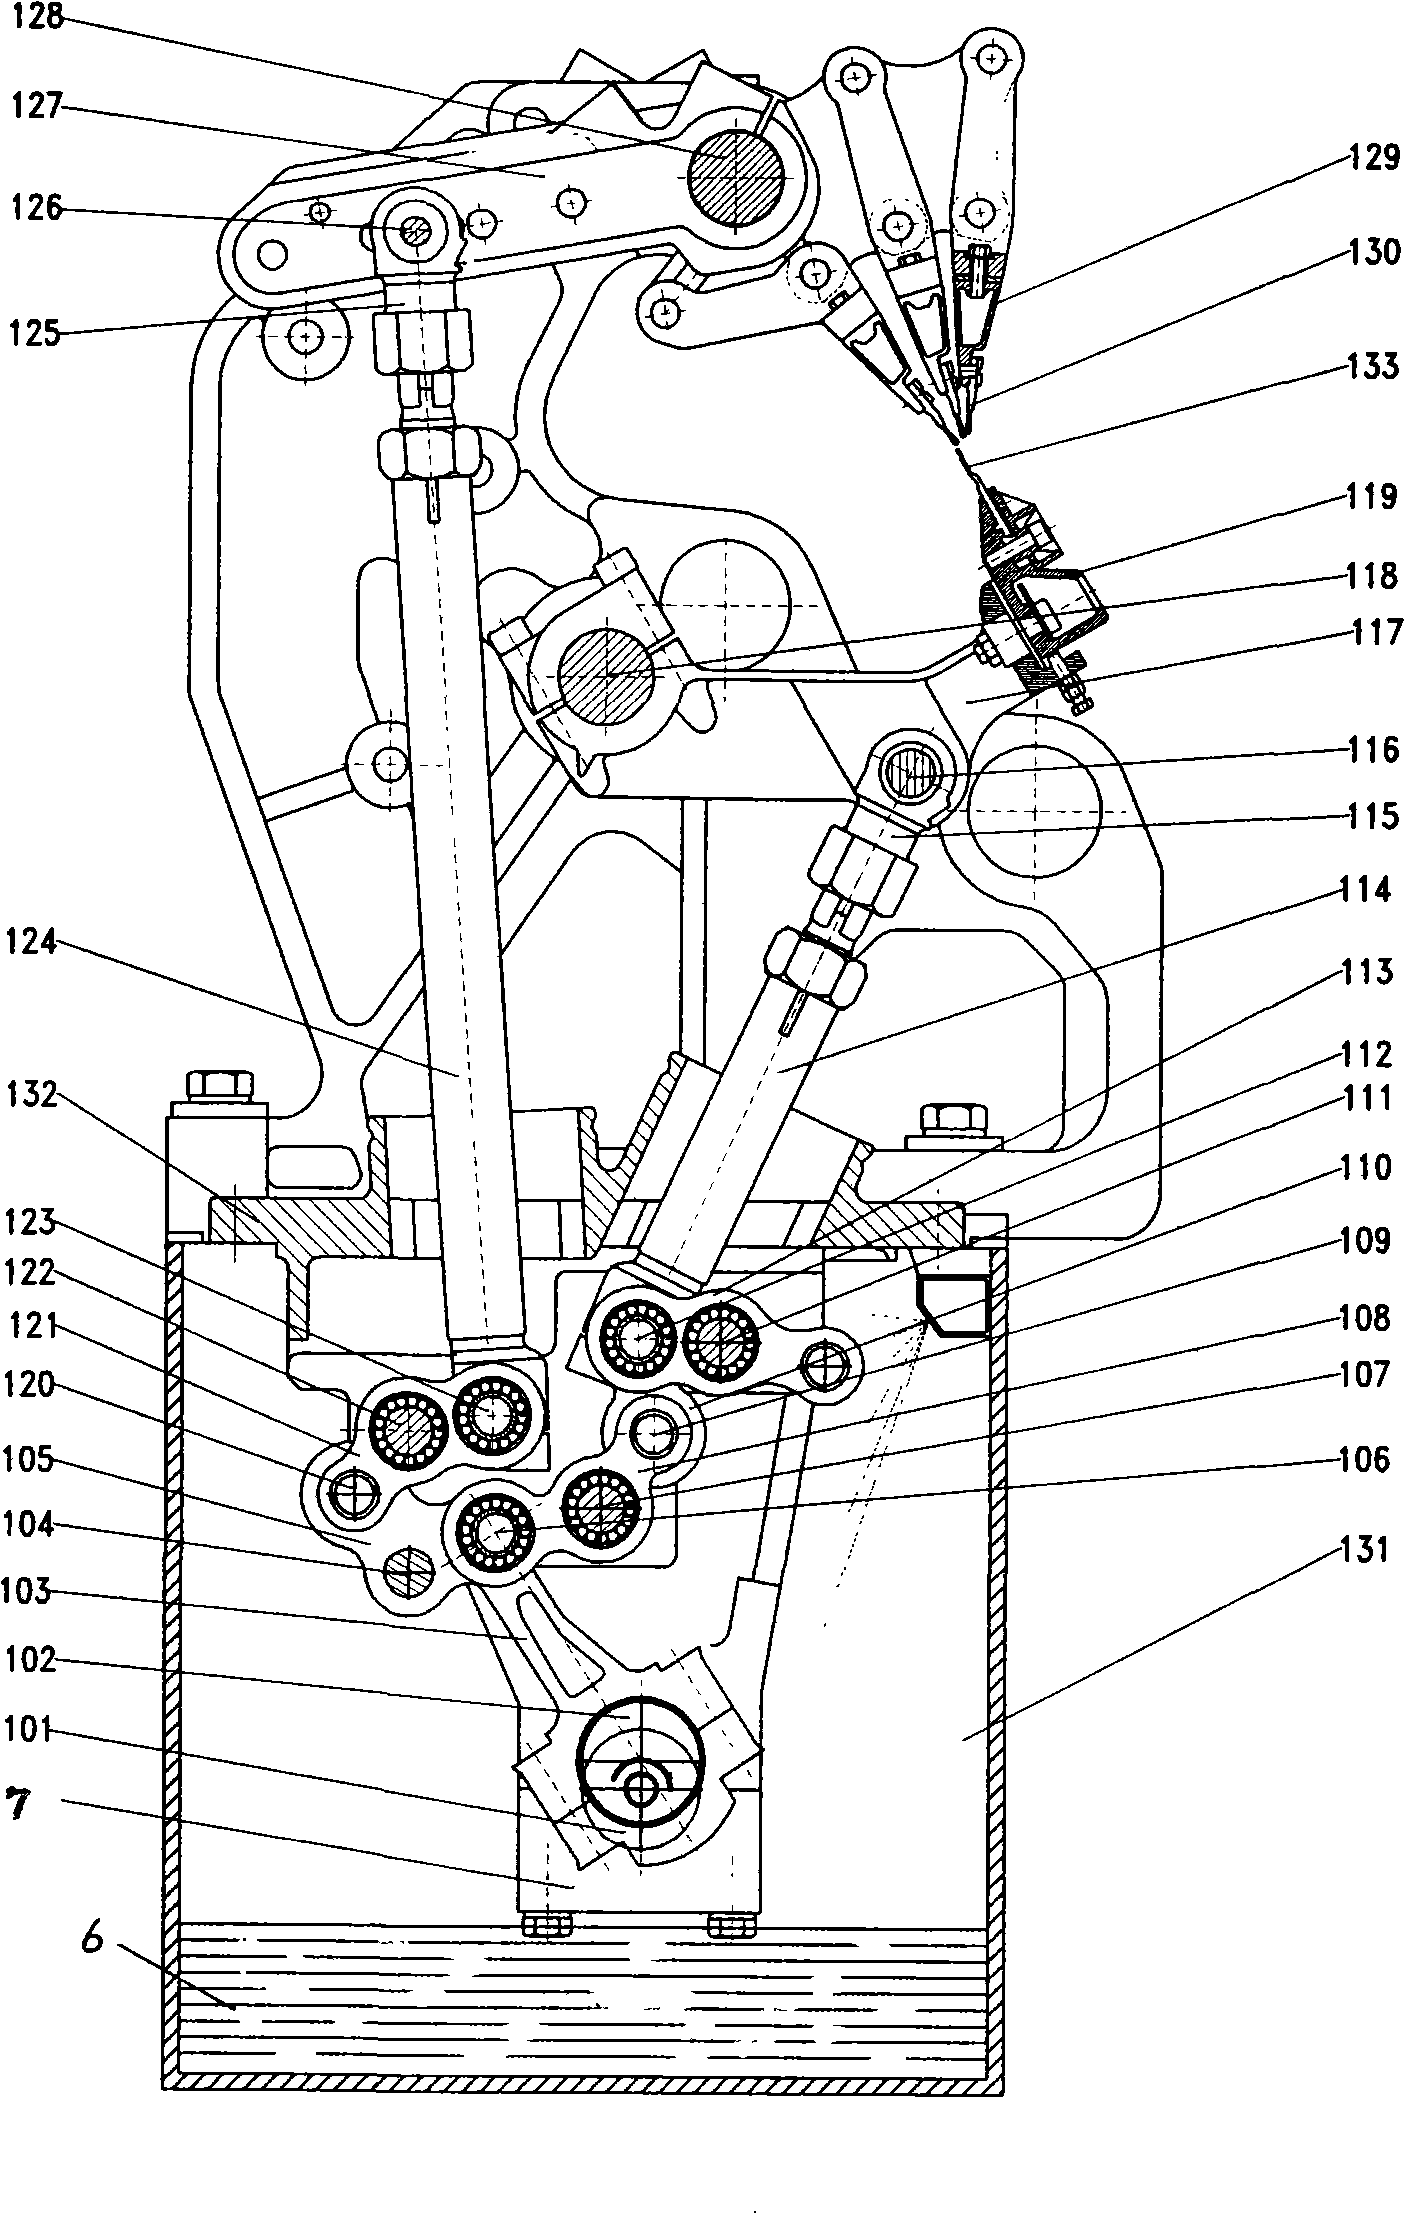 Short tranverse crankshaft connecting rod device of warp knitting machine